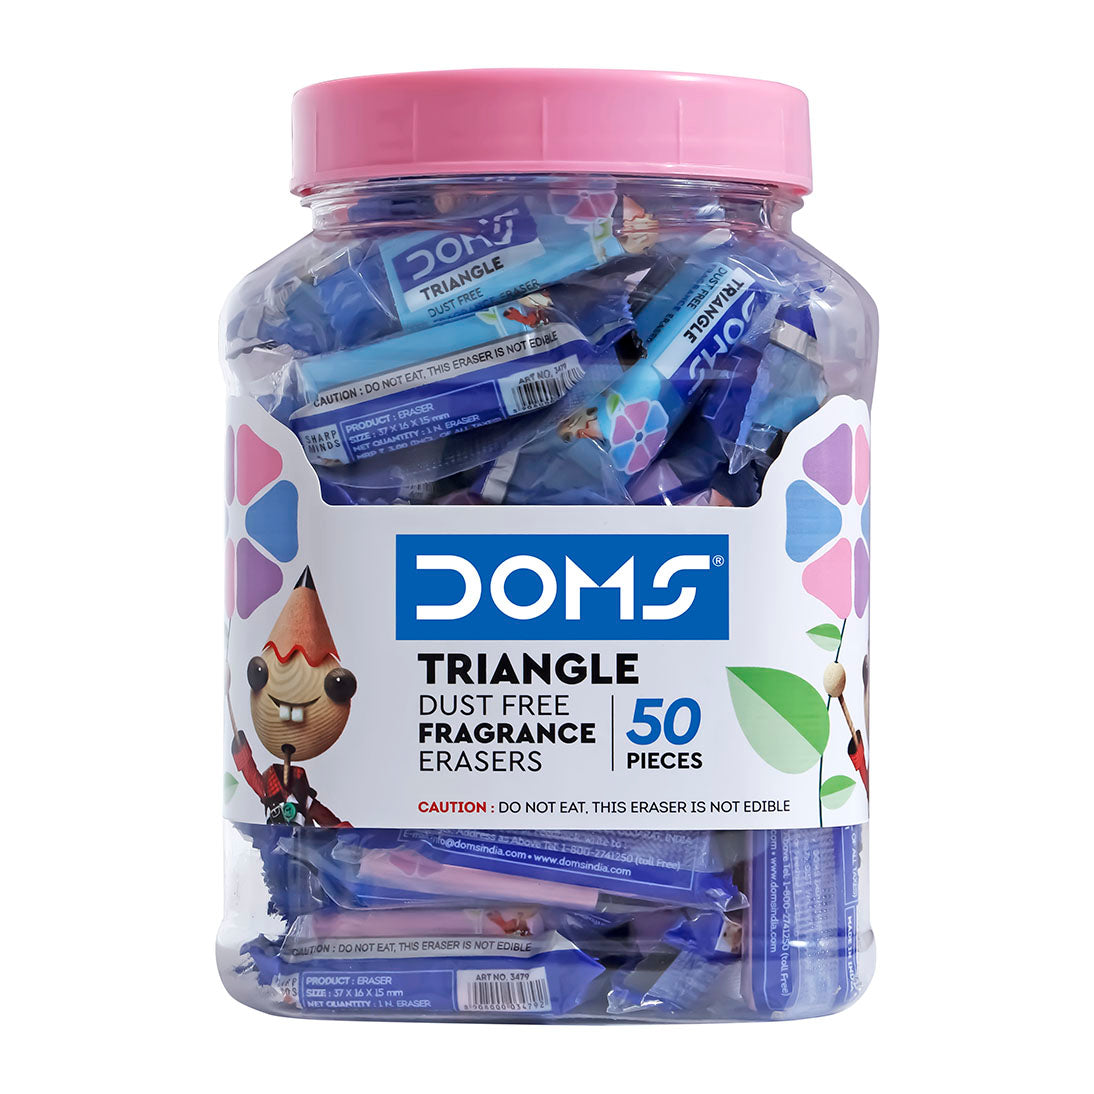 DOMS Triangle Dust Free Fragrance Eraser Jar 50 Pcs